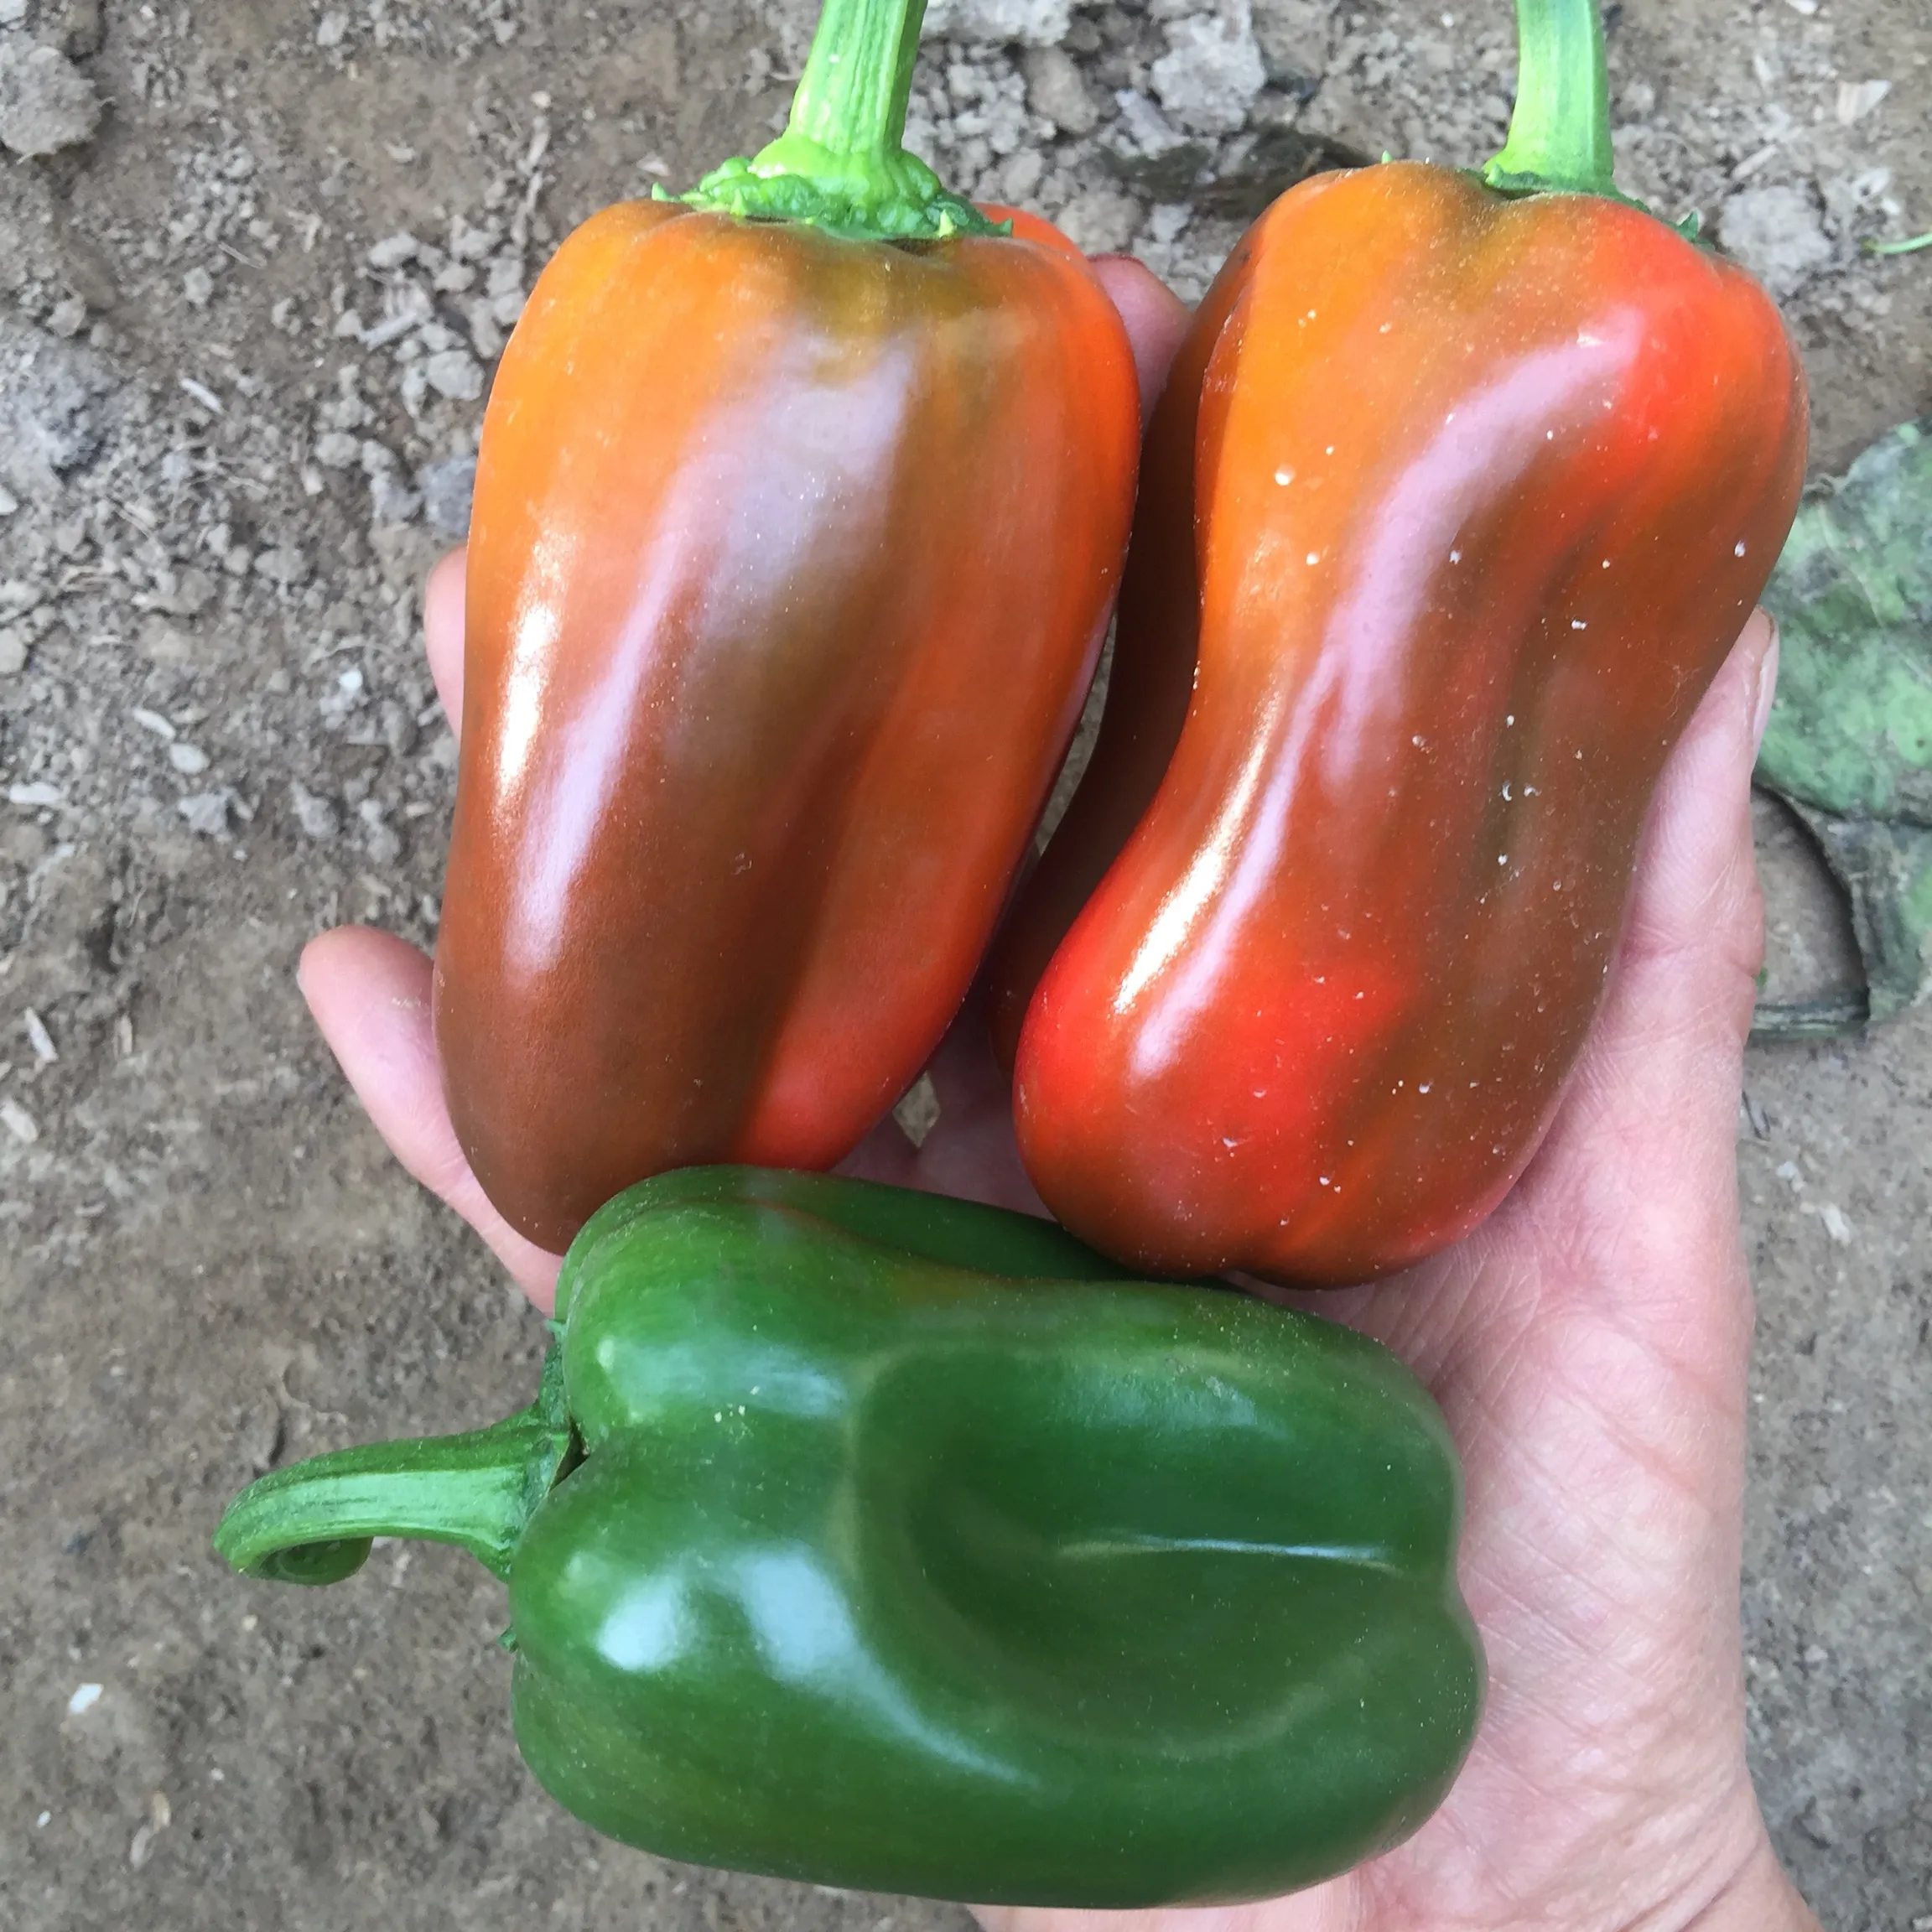 BERG F1 big bright green F1 hybrid sweet/bell pepper seeds for planting